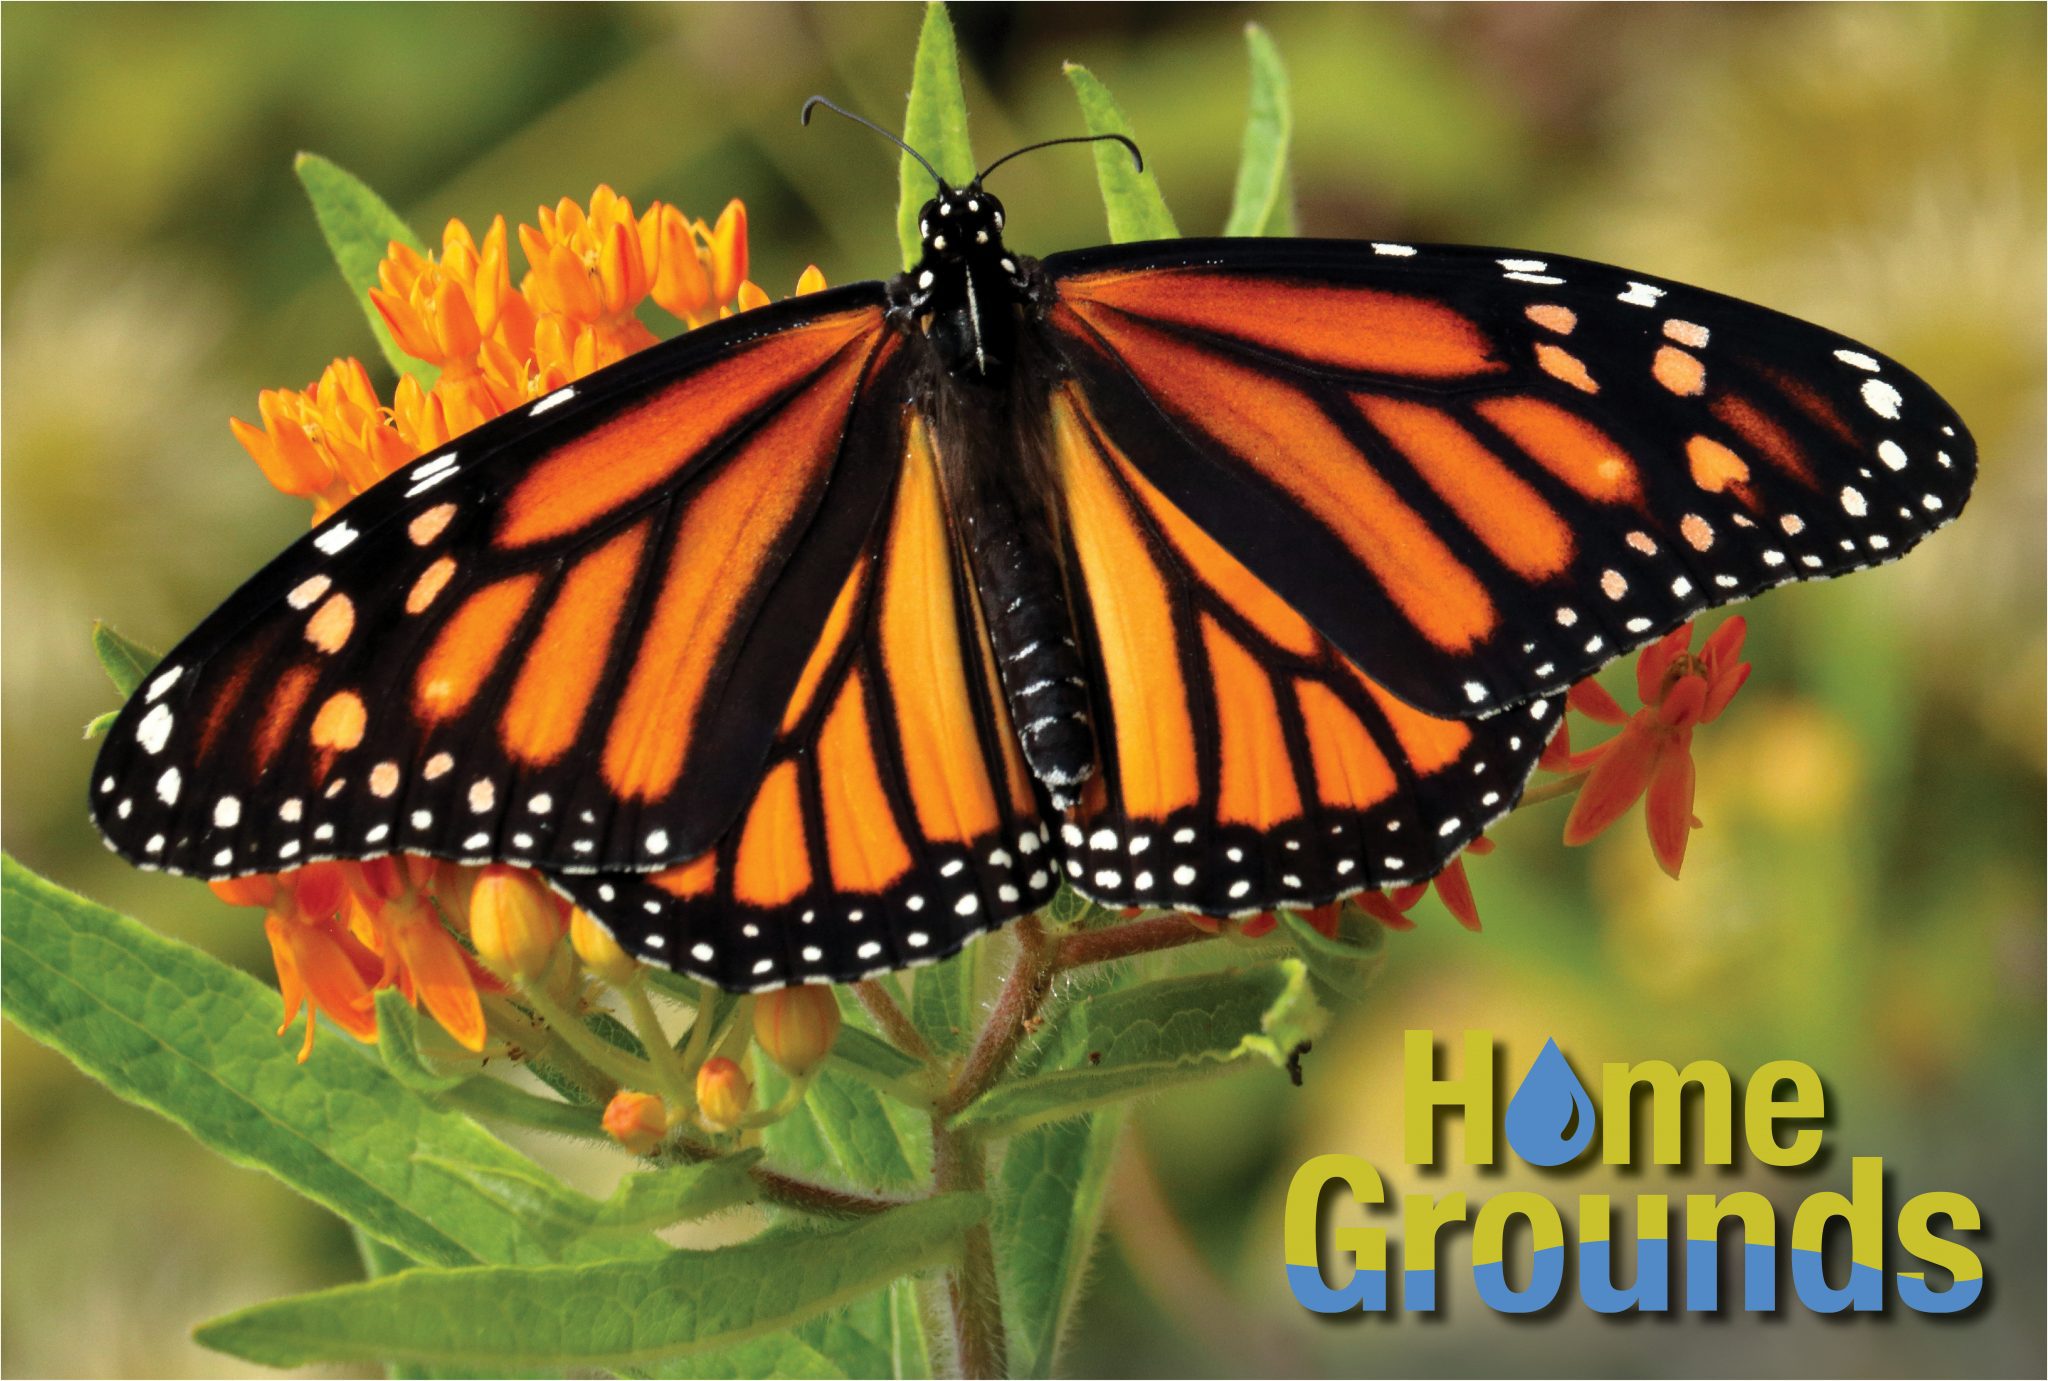 Monarch Butterfly resting on flower